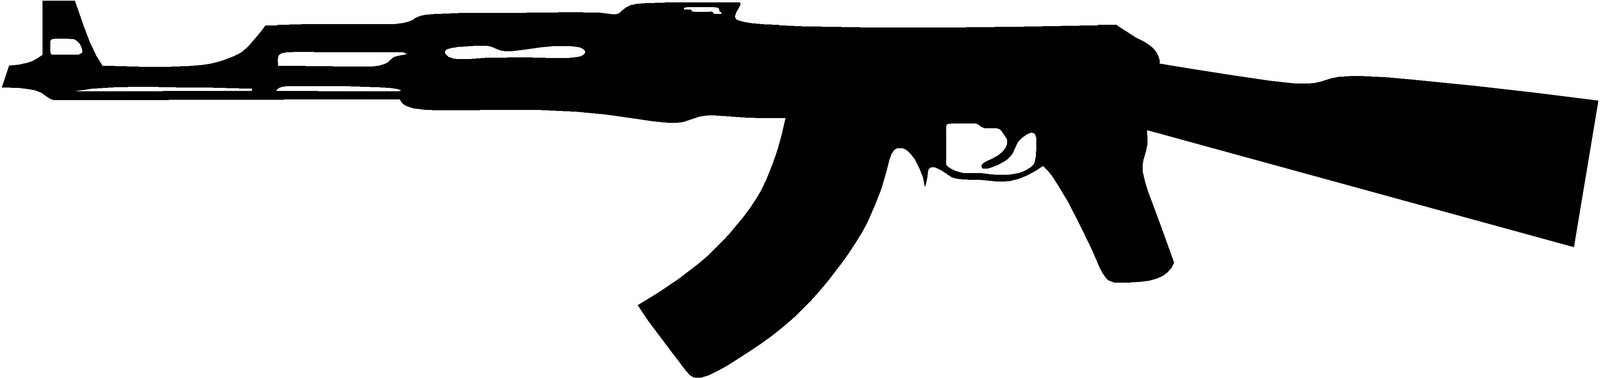 Kalashnikov clipart - Clipground